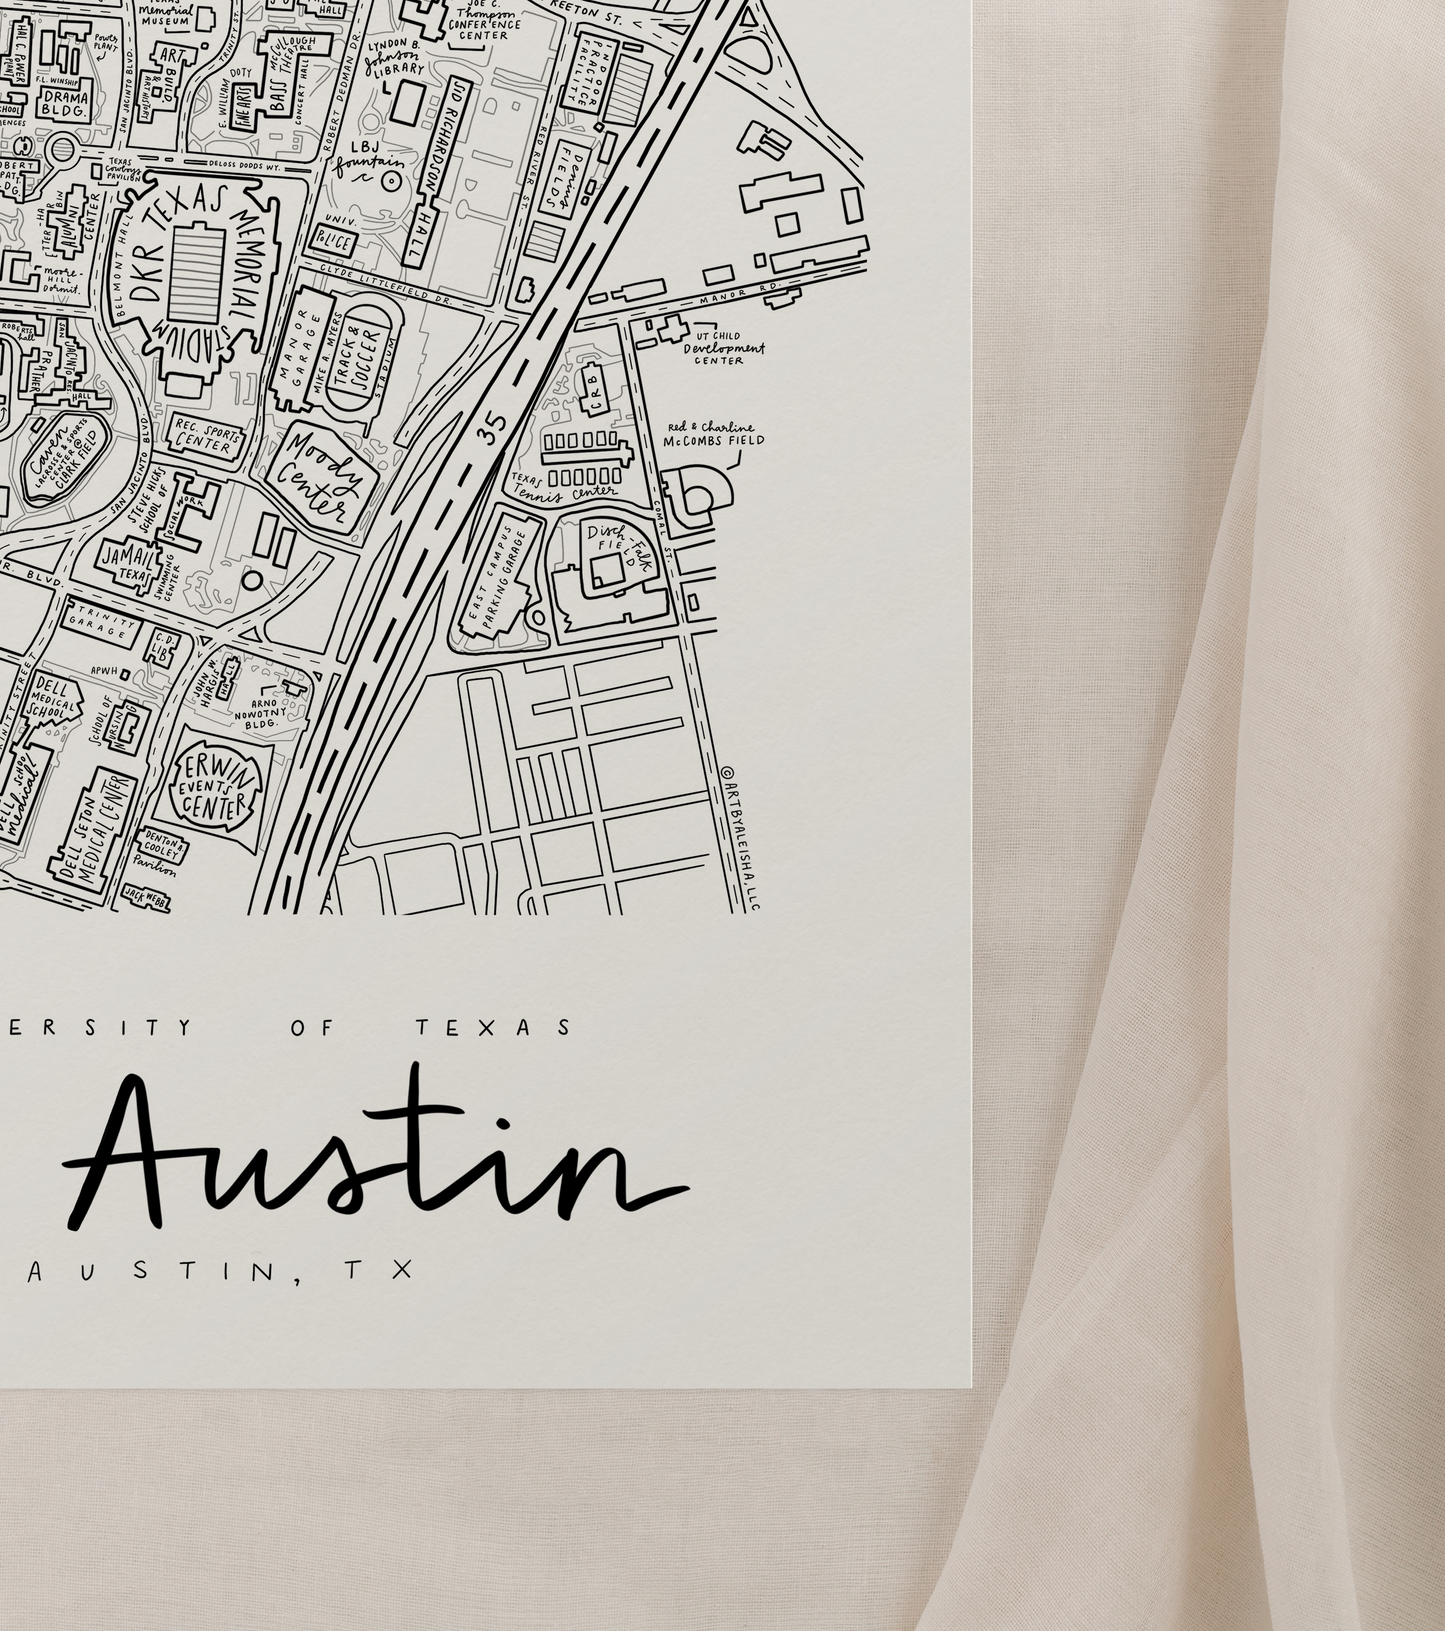 University of Texas at Austin (UT Austin) Campus Map Print